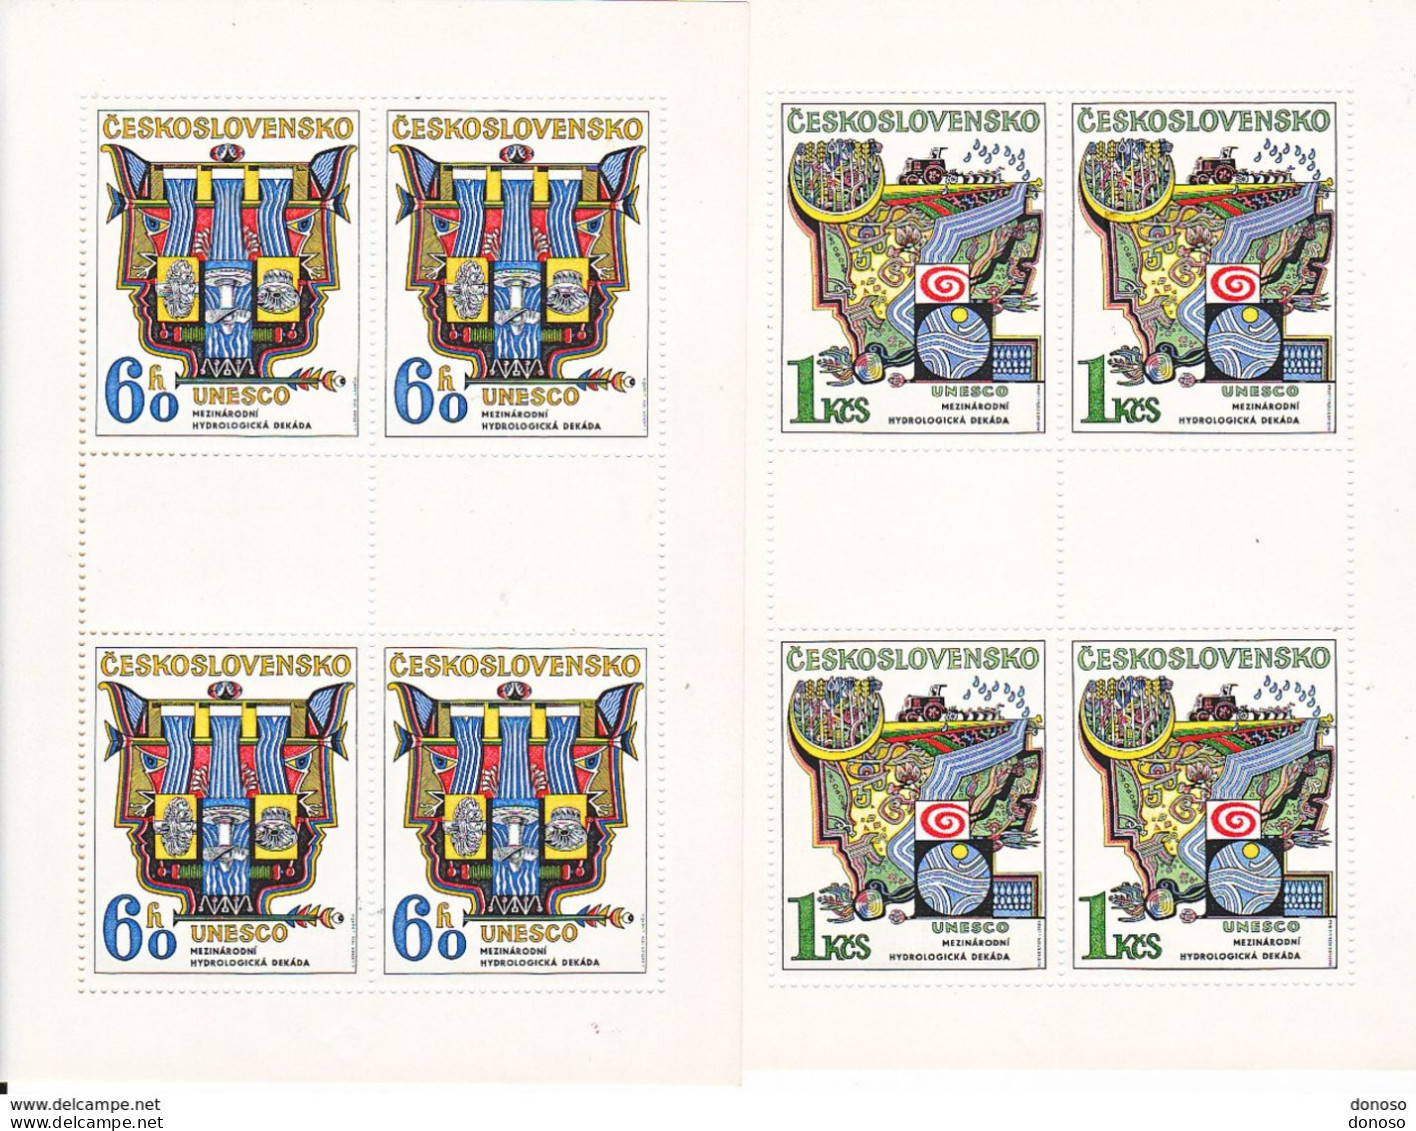 TCHECOSLOVAQUIE 1974 UNESCO Yvert 2040-2044 5 FEUILLETS, Michel 2195-2199 KB NEUF** MNH - Unused Stamps